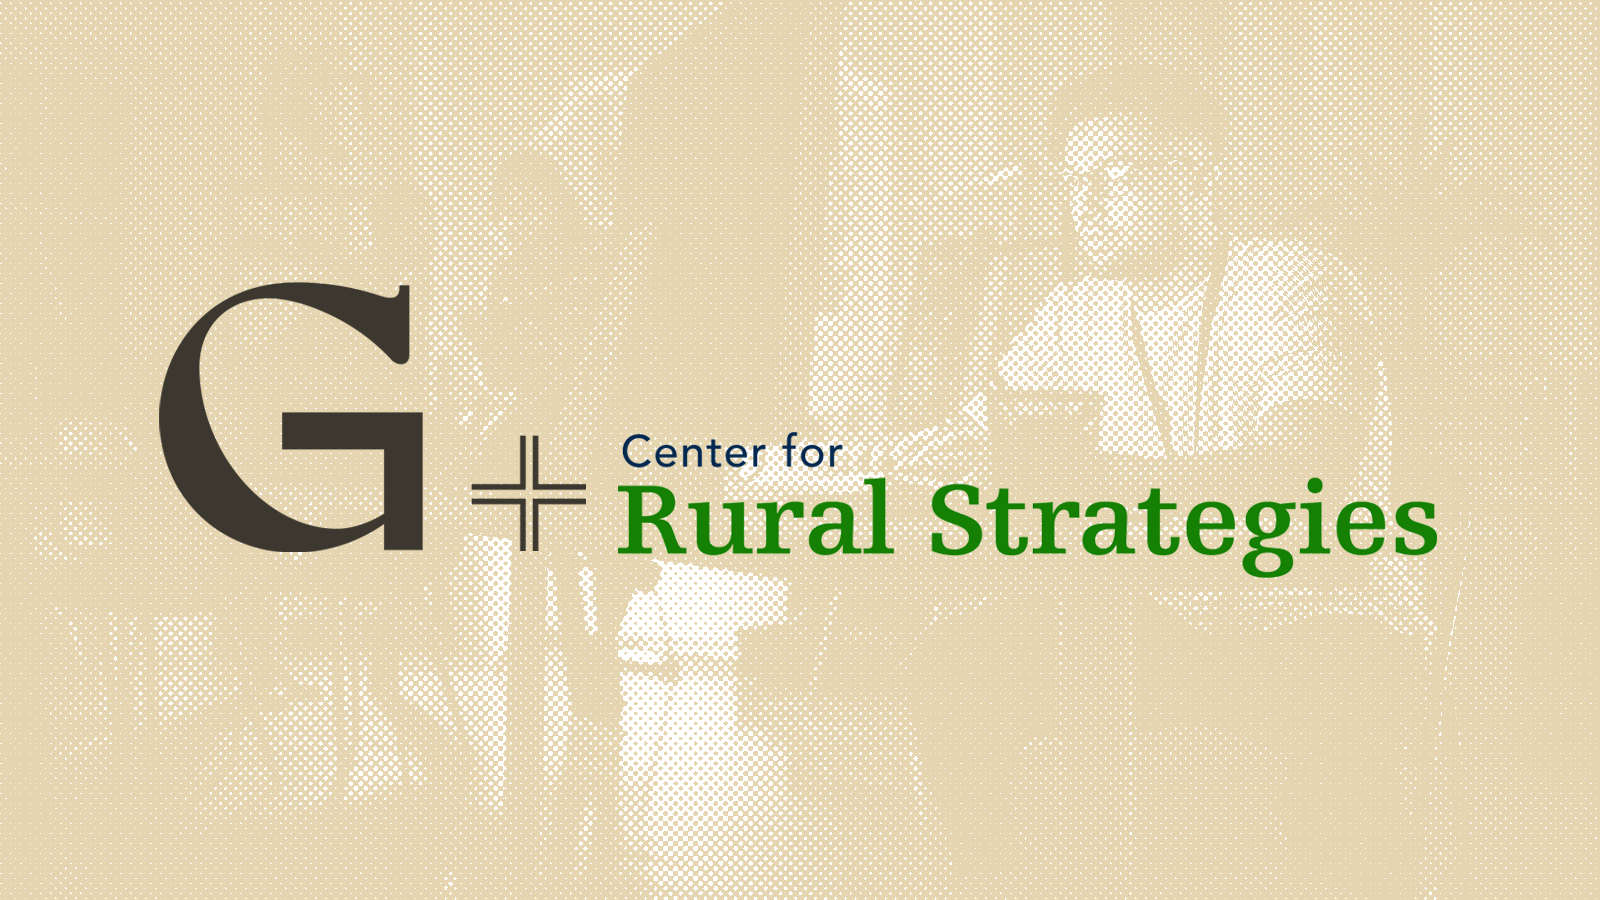 Grist + Center for Rural Strategies